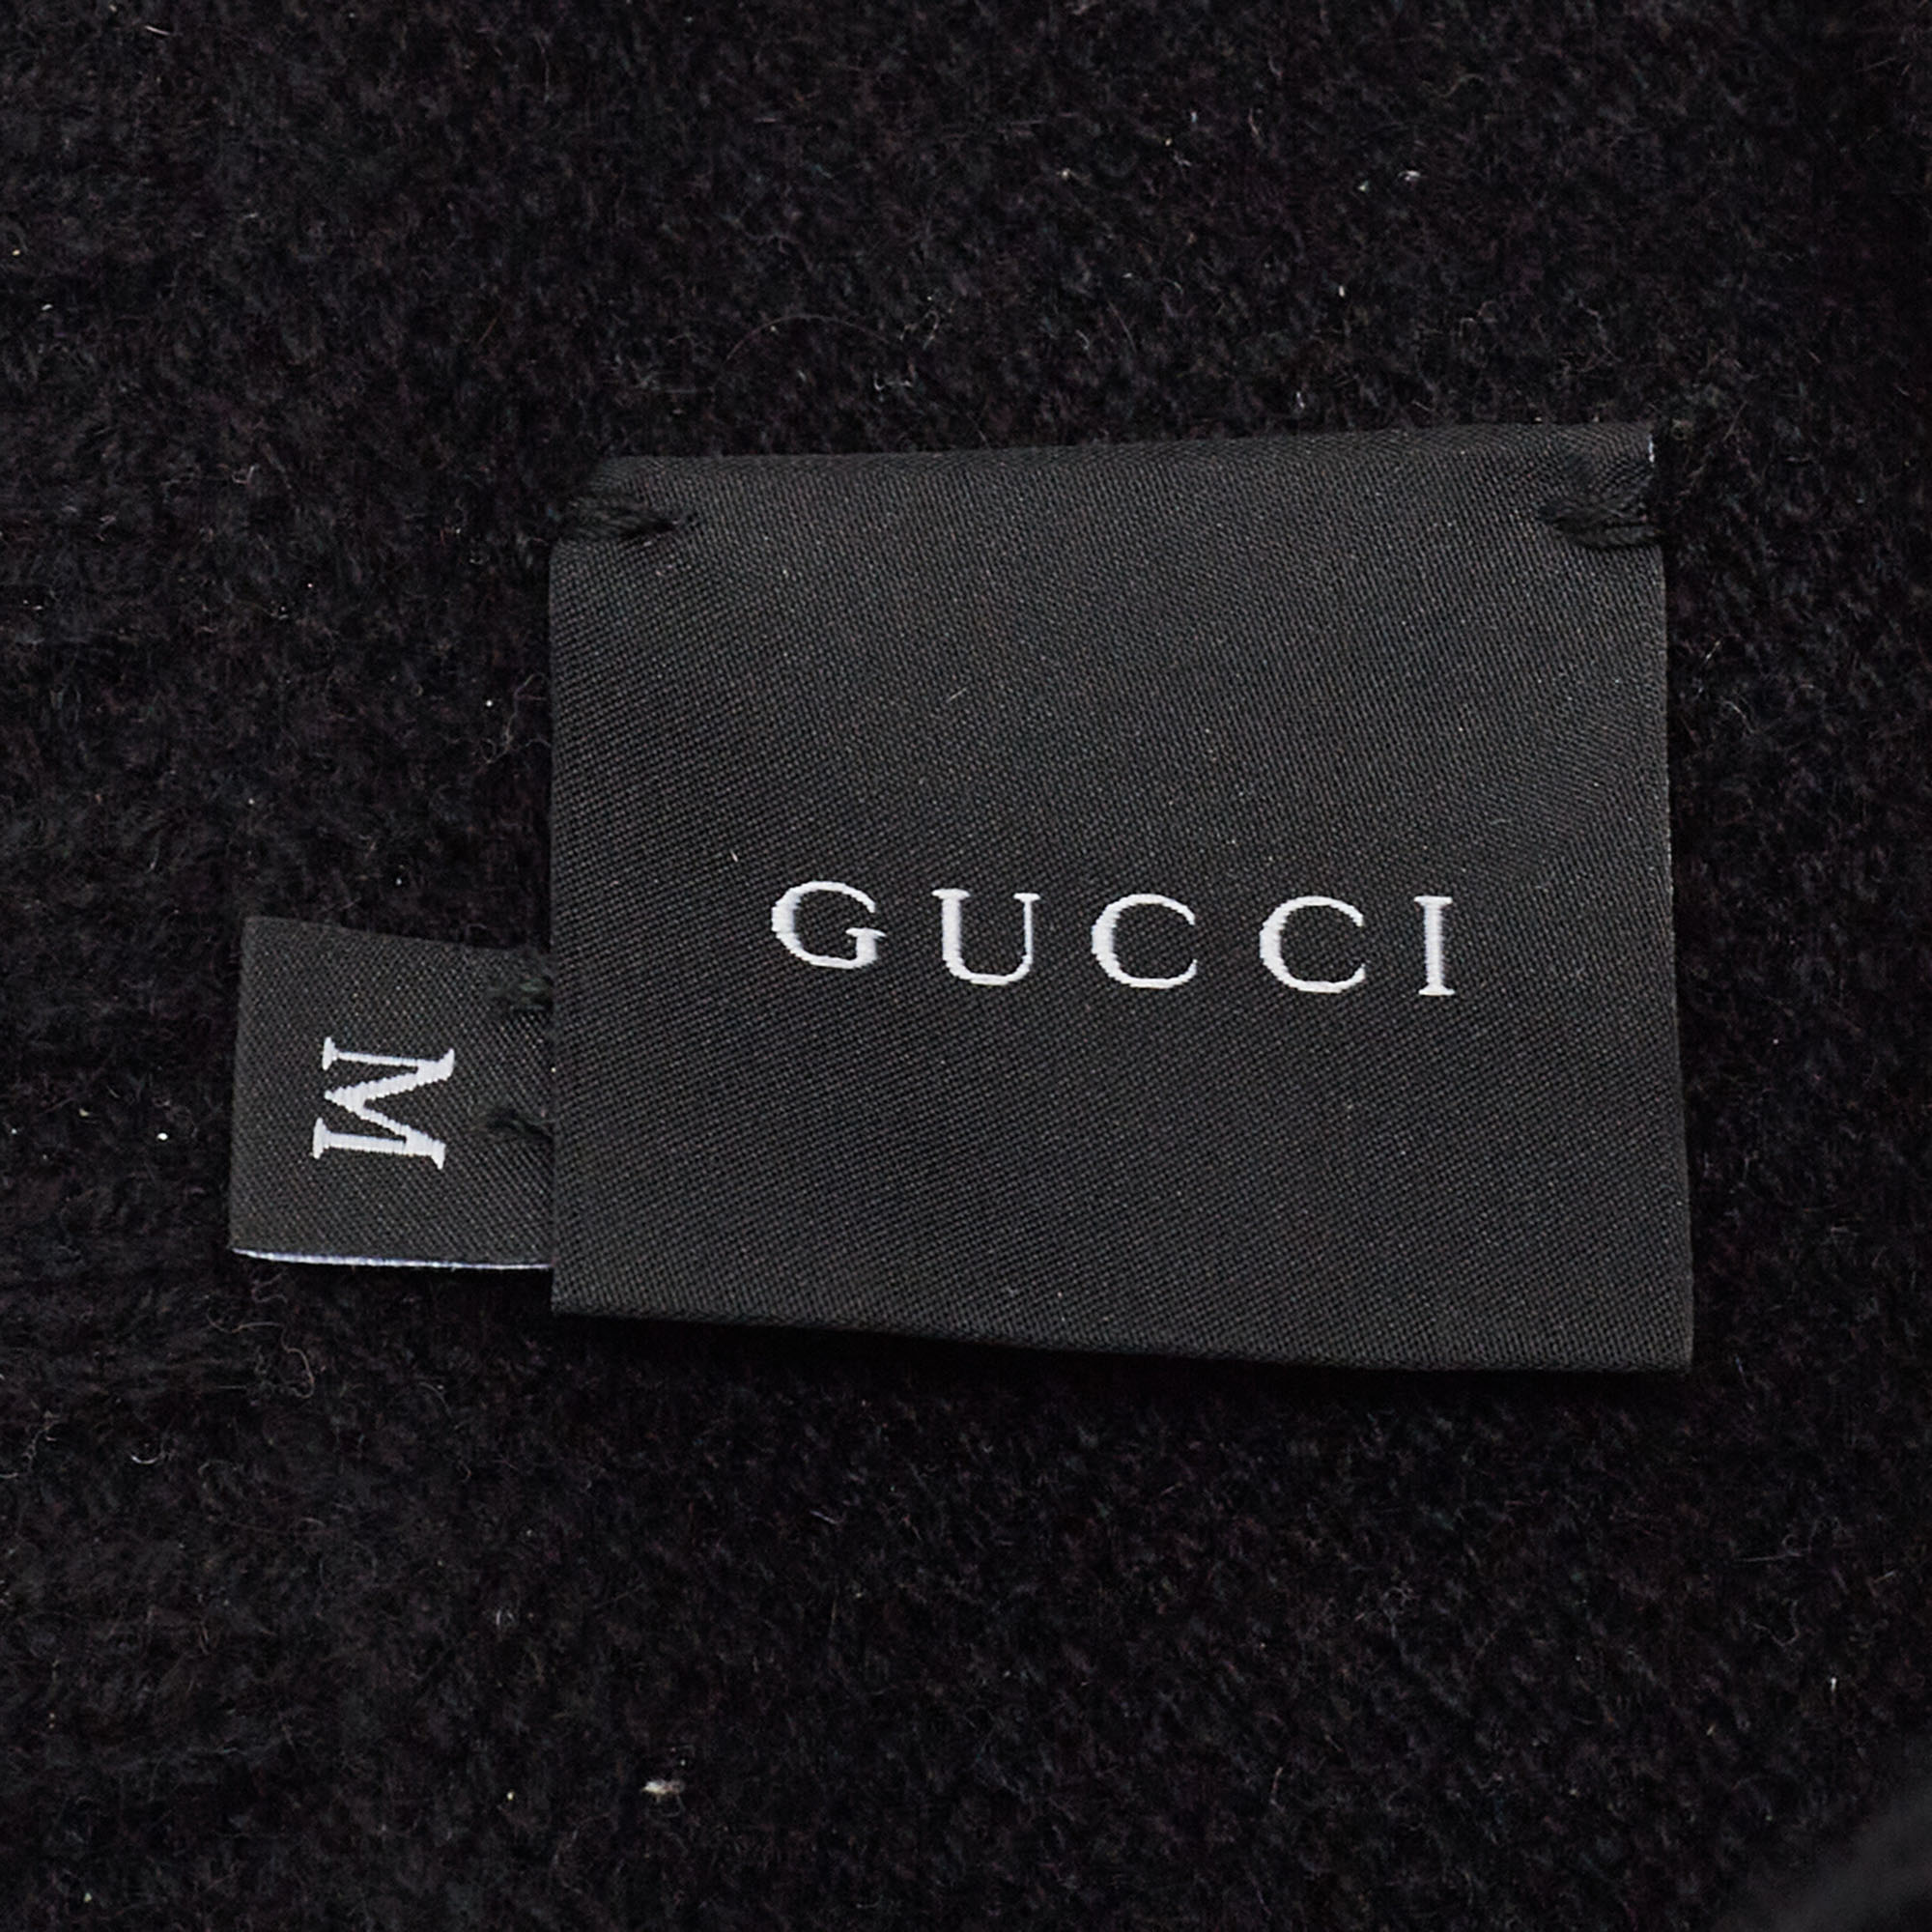 Gucci Black Rib Cashmere Knit Beanie S